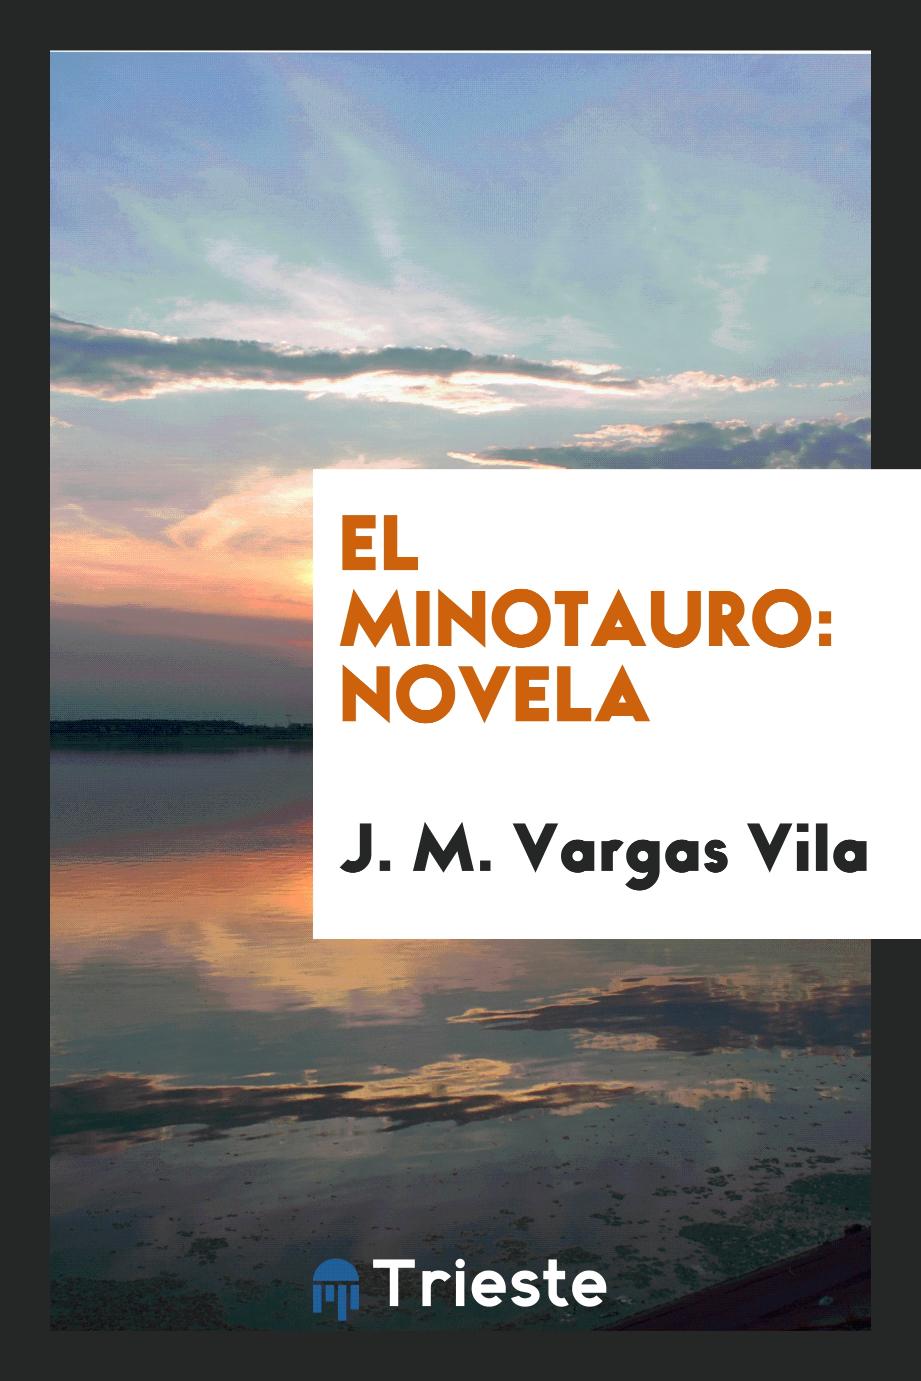 El minotauro: novela